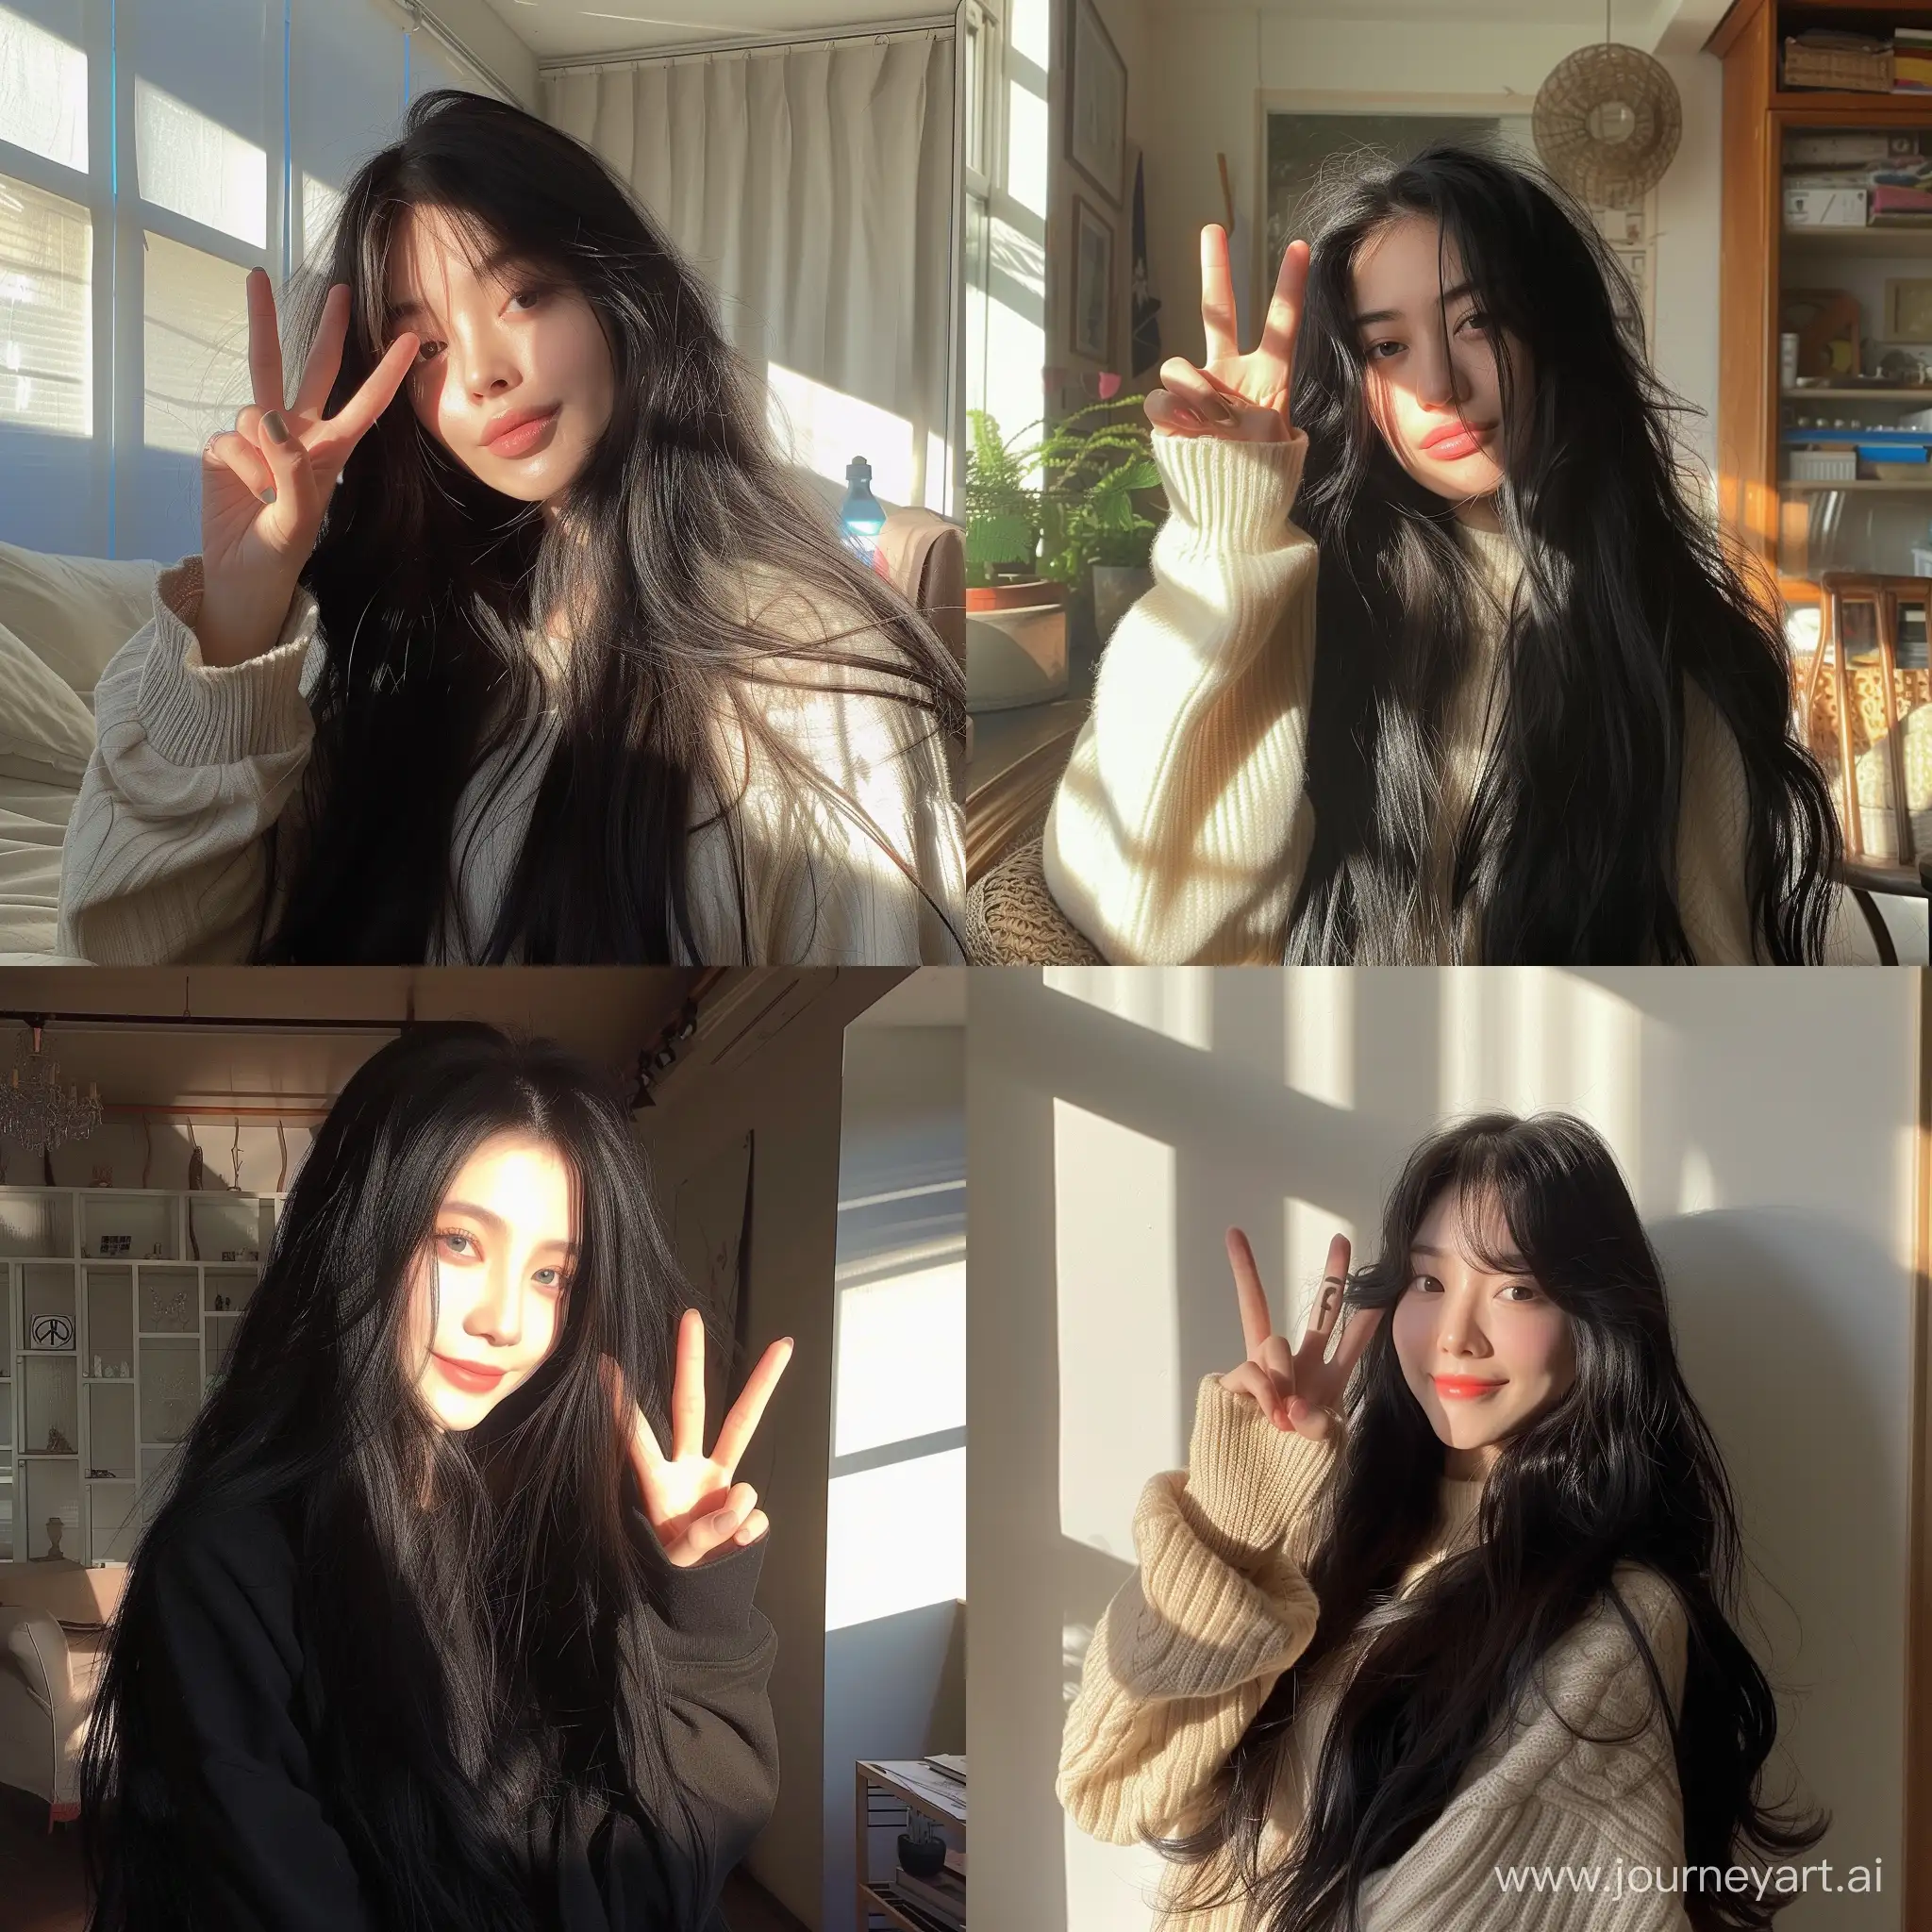 Sunlit-Room-Portrait-Instagram-PFP-Girl-with-Long-Black-Hair-Making-Peace-Sign